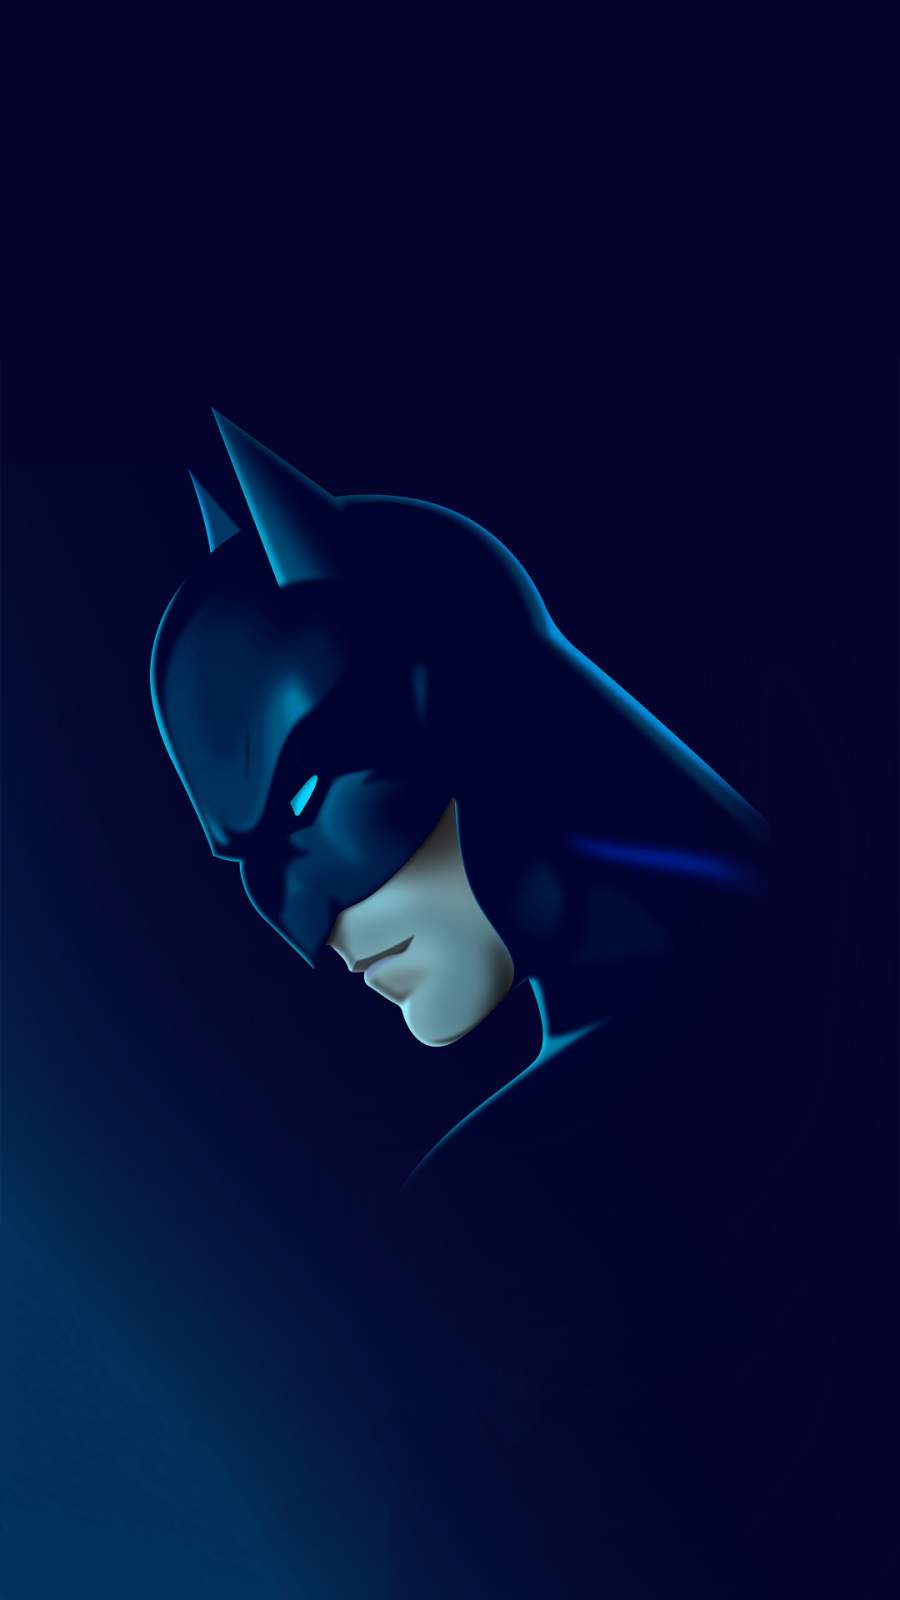 Batman 4K Minimal IPhone Wallpaper Wallpaper, iPhone Wallpaper